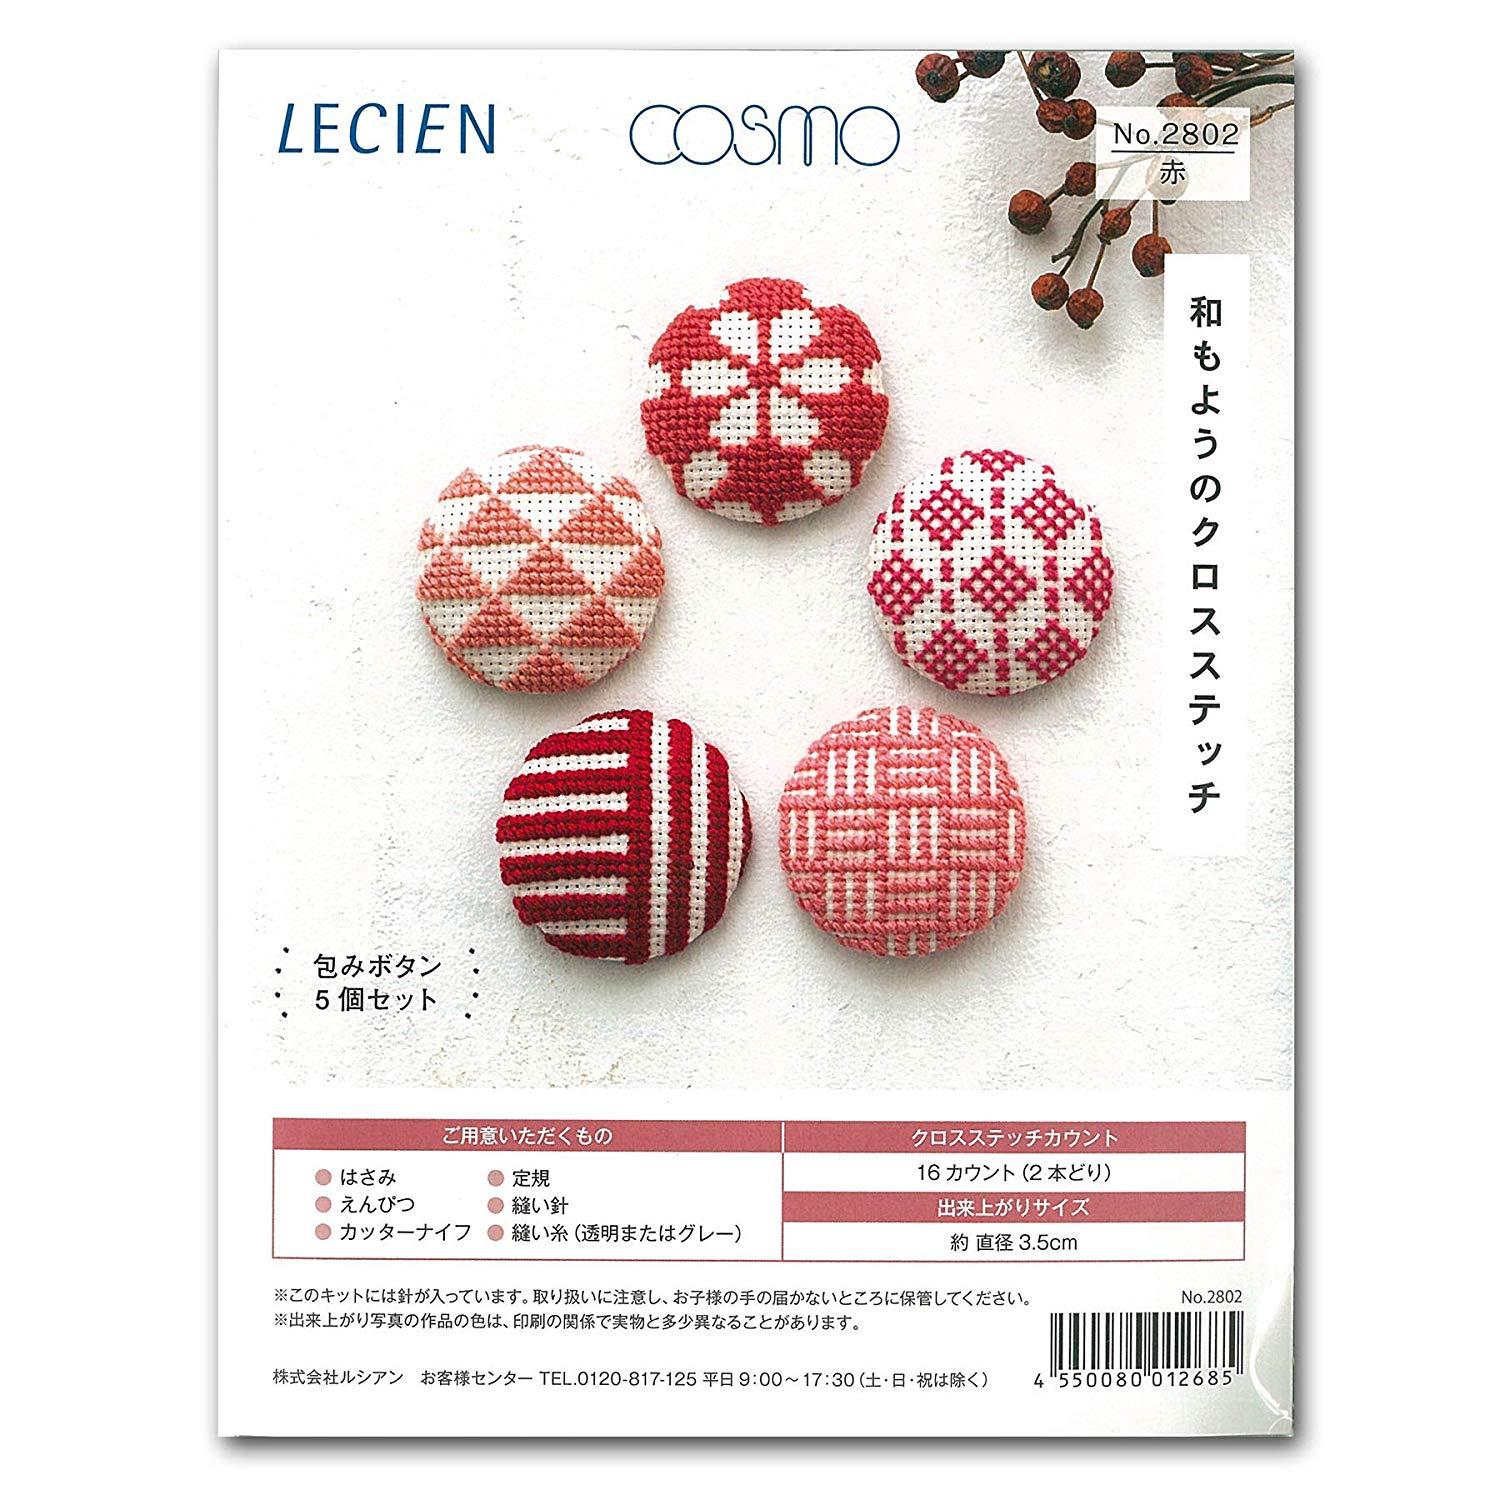 LECIEN (ルシアン) 刺繍キット 和もようのクロスステッチ 包みボタン 5個セット 赤・2802 (1402669)